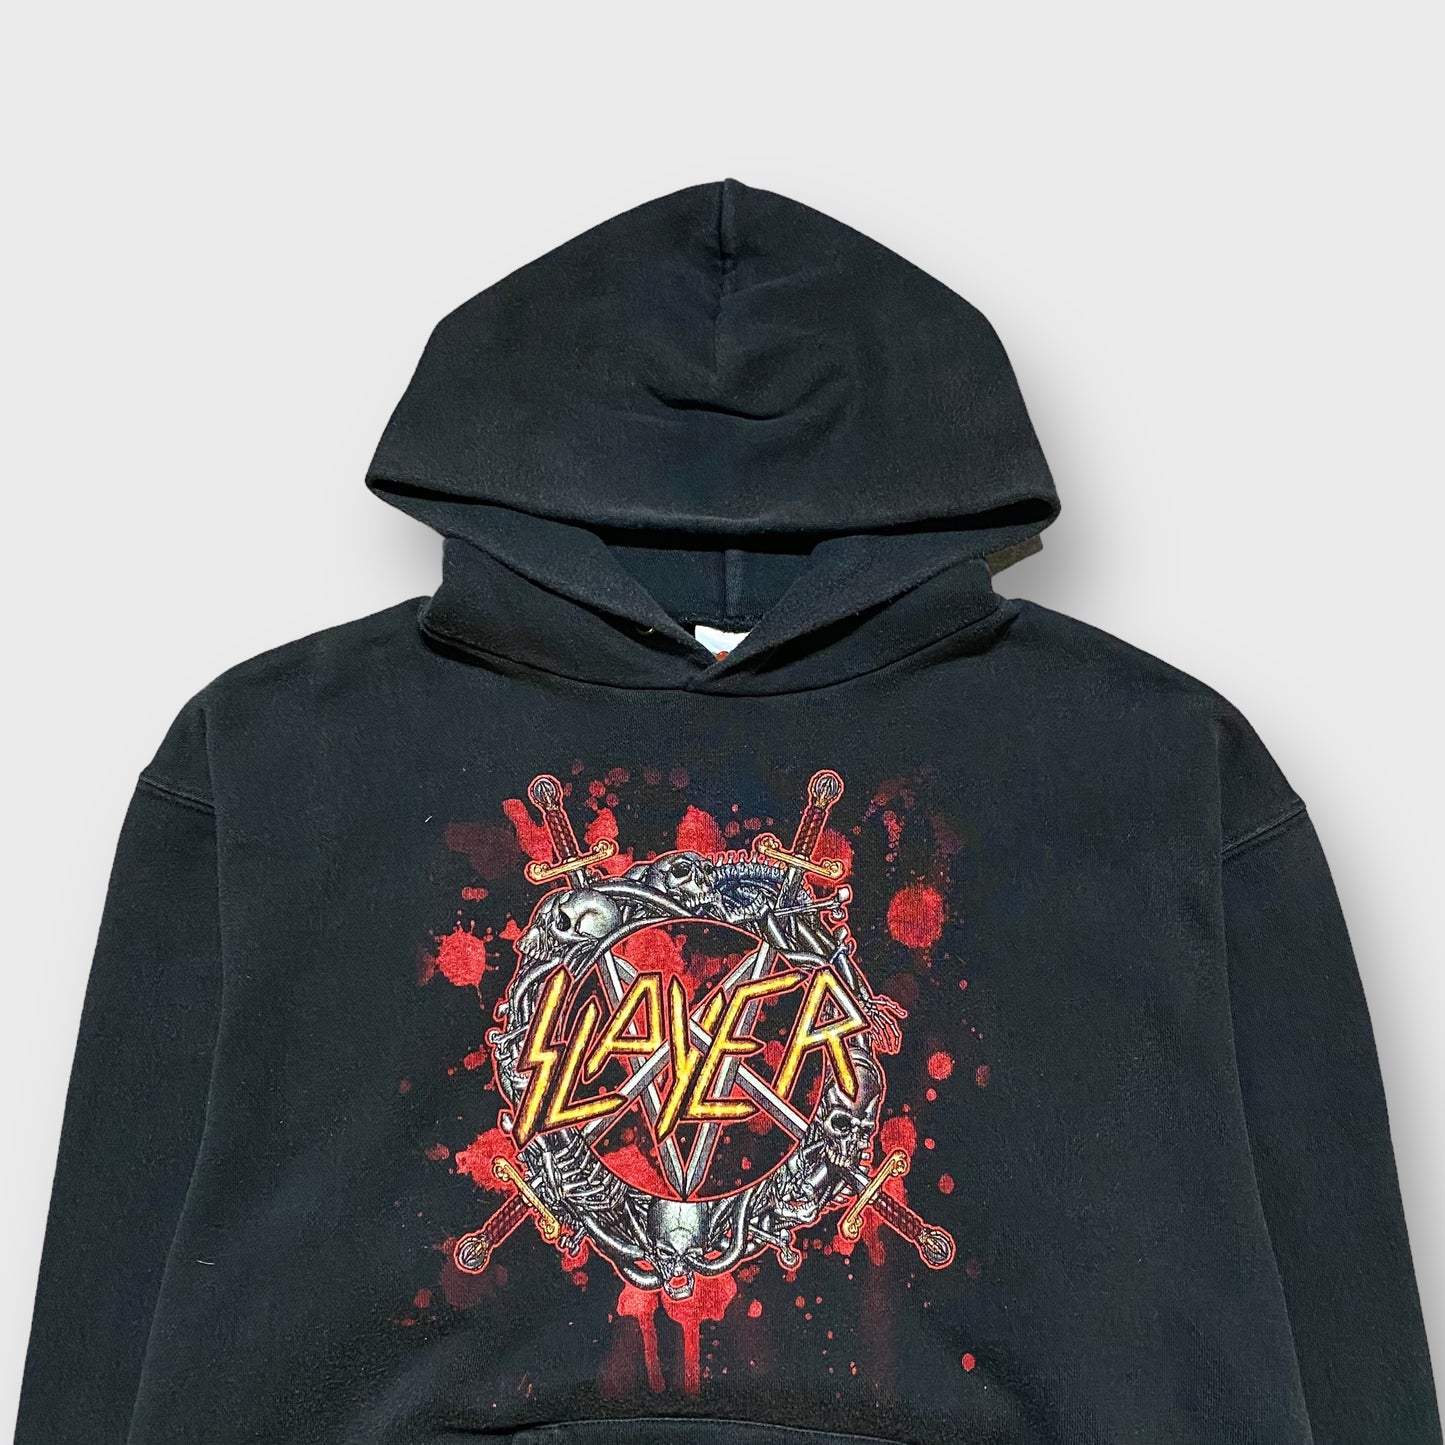 00's "SLAYER" Band design hoodie